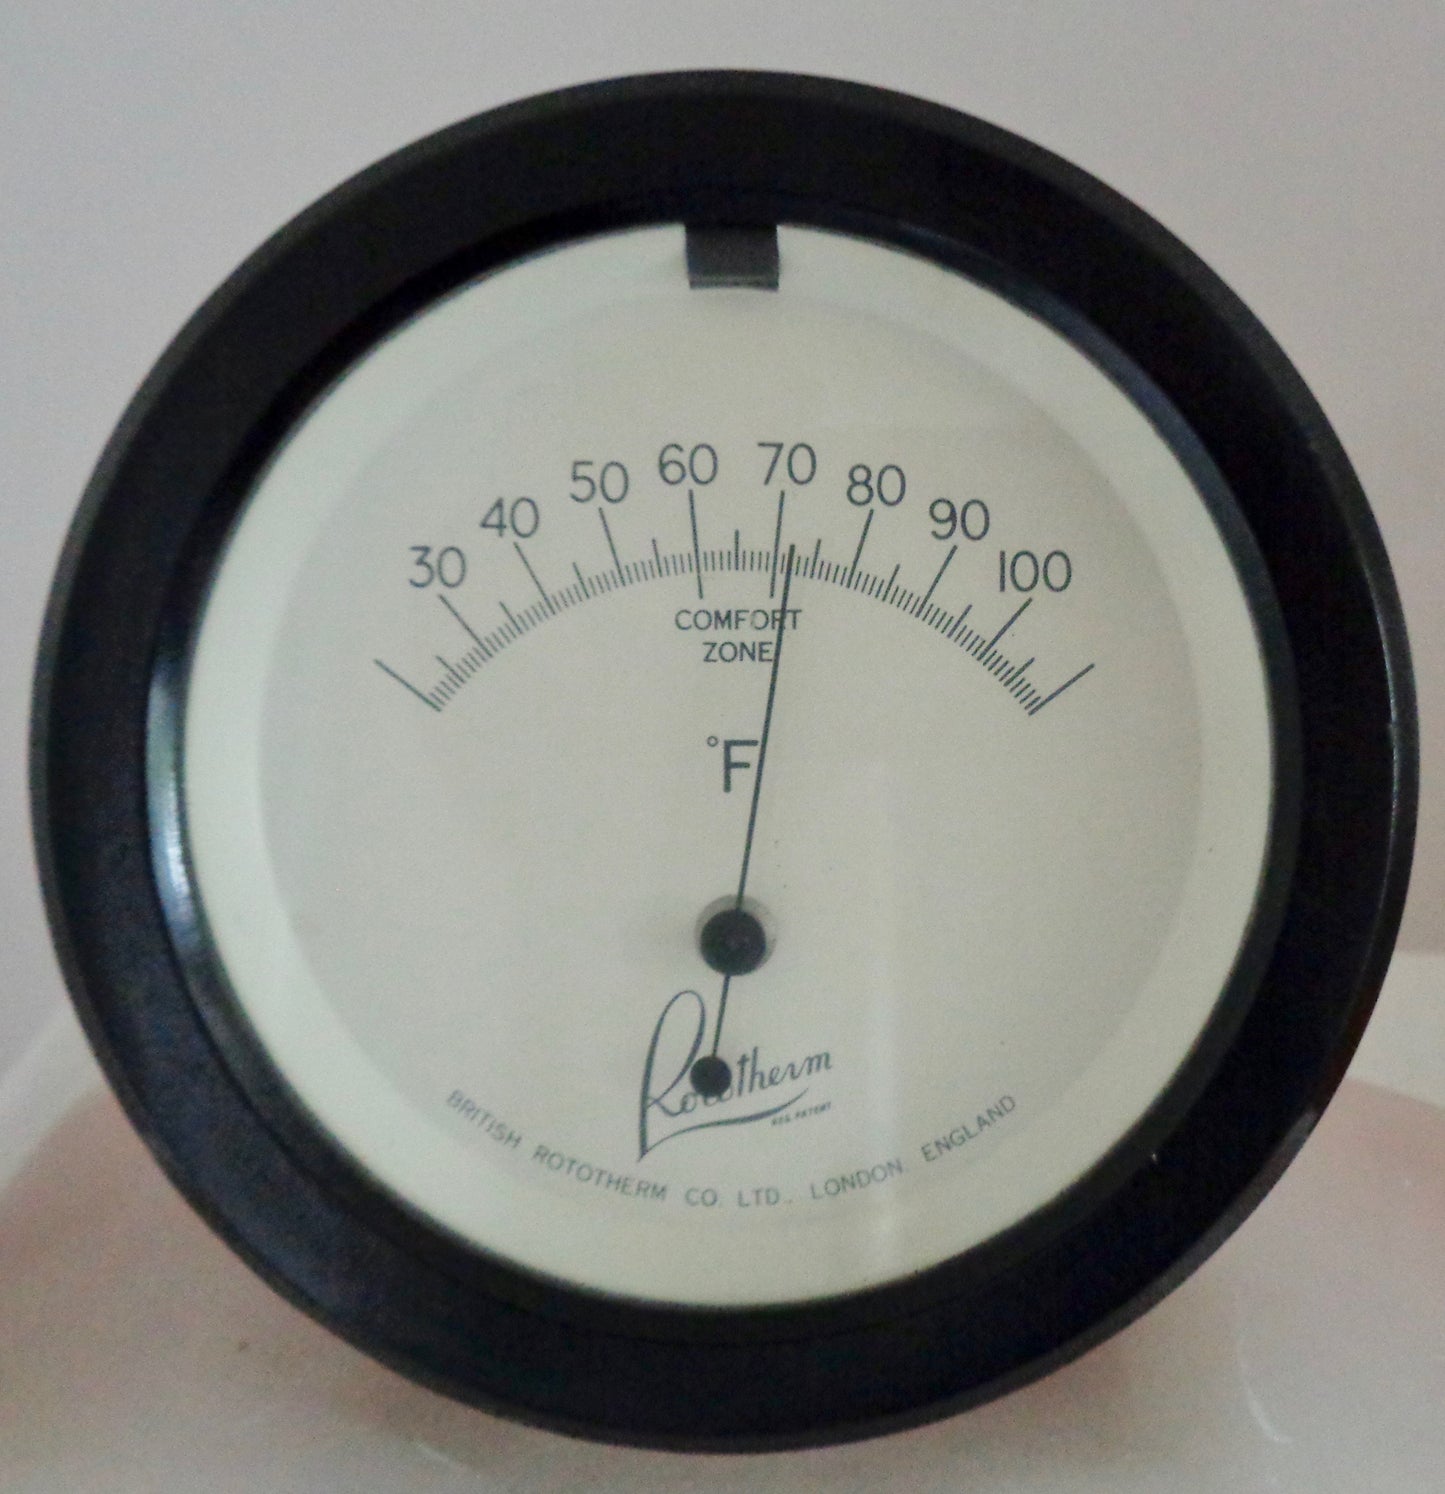 Vintage Bakelite Rototherm Thermometer On Alabaster Base